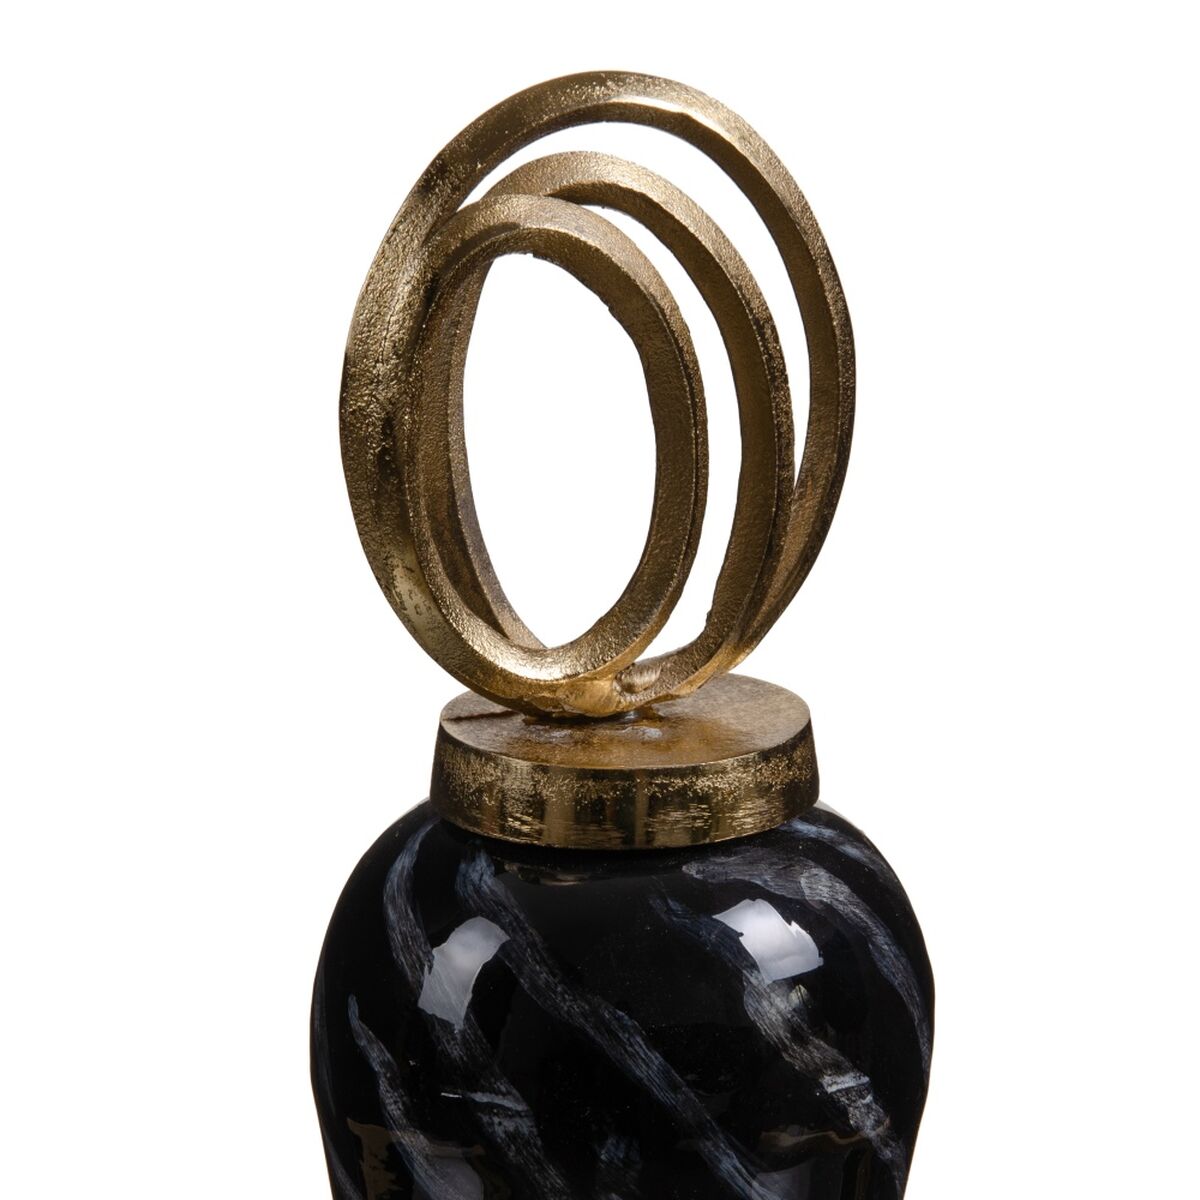 Vase Crystal Black Golden Metal 15 x 15 x 46 cm